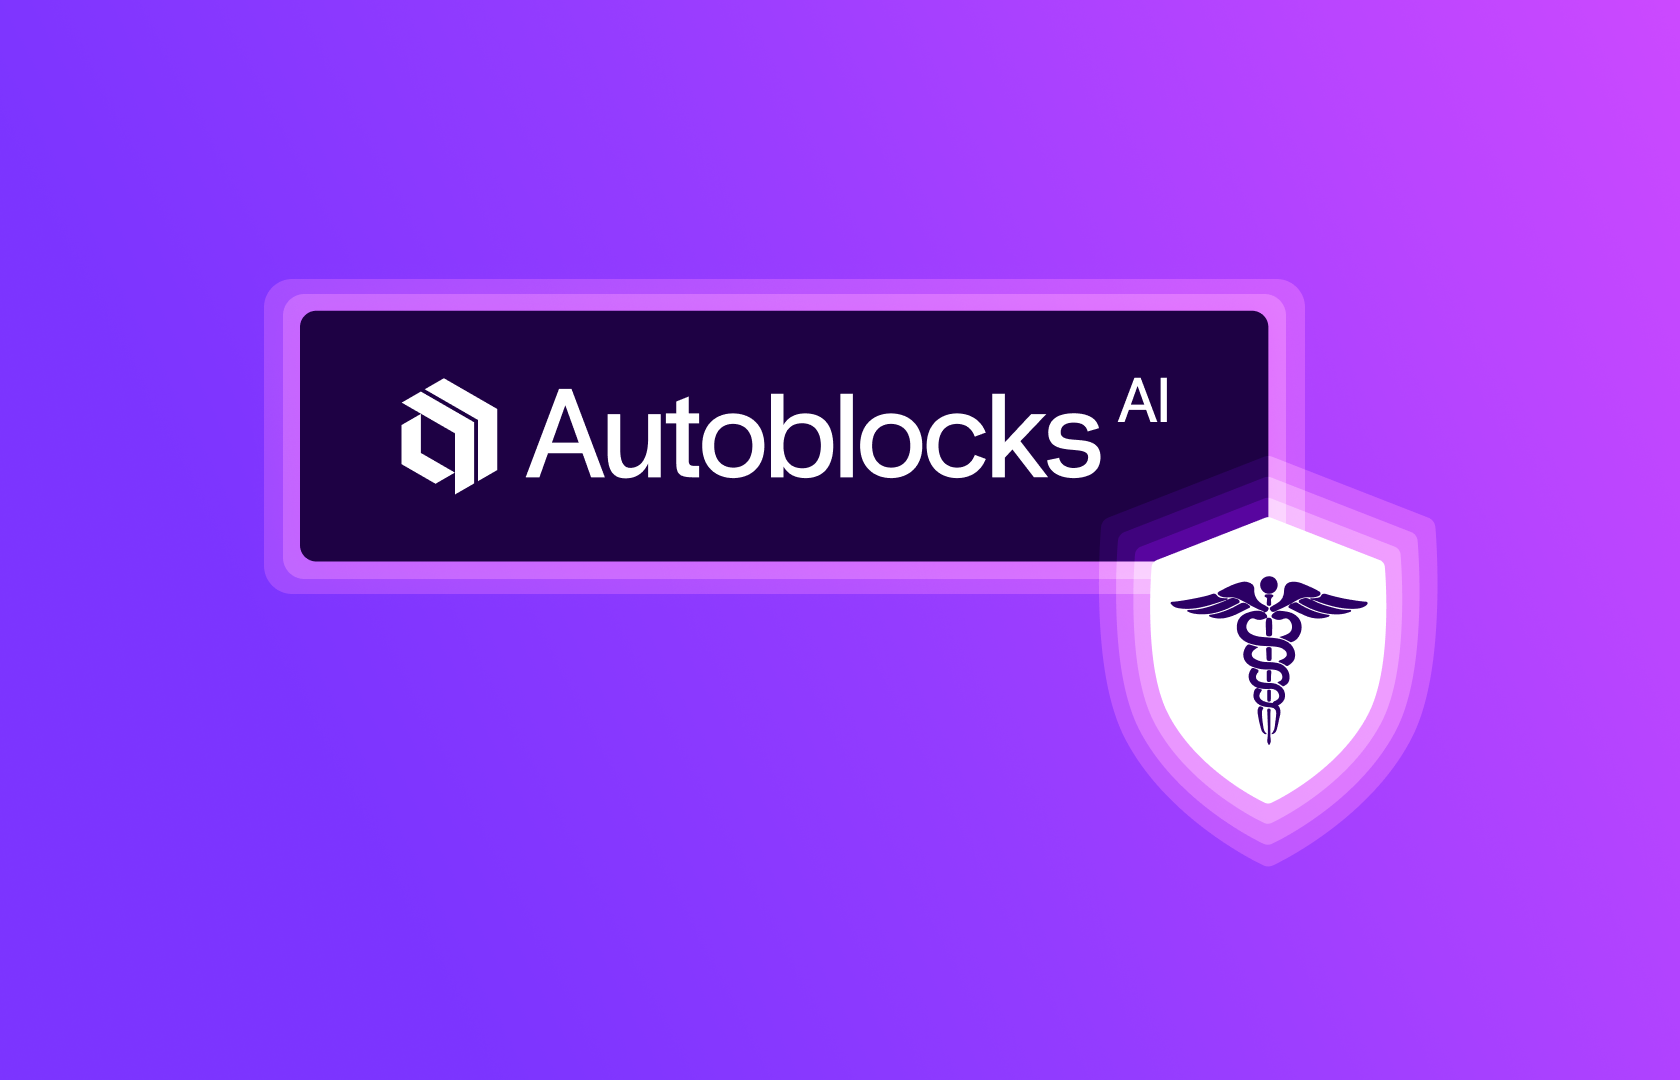 Autoblocks AI is HIPAA Compliant Image